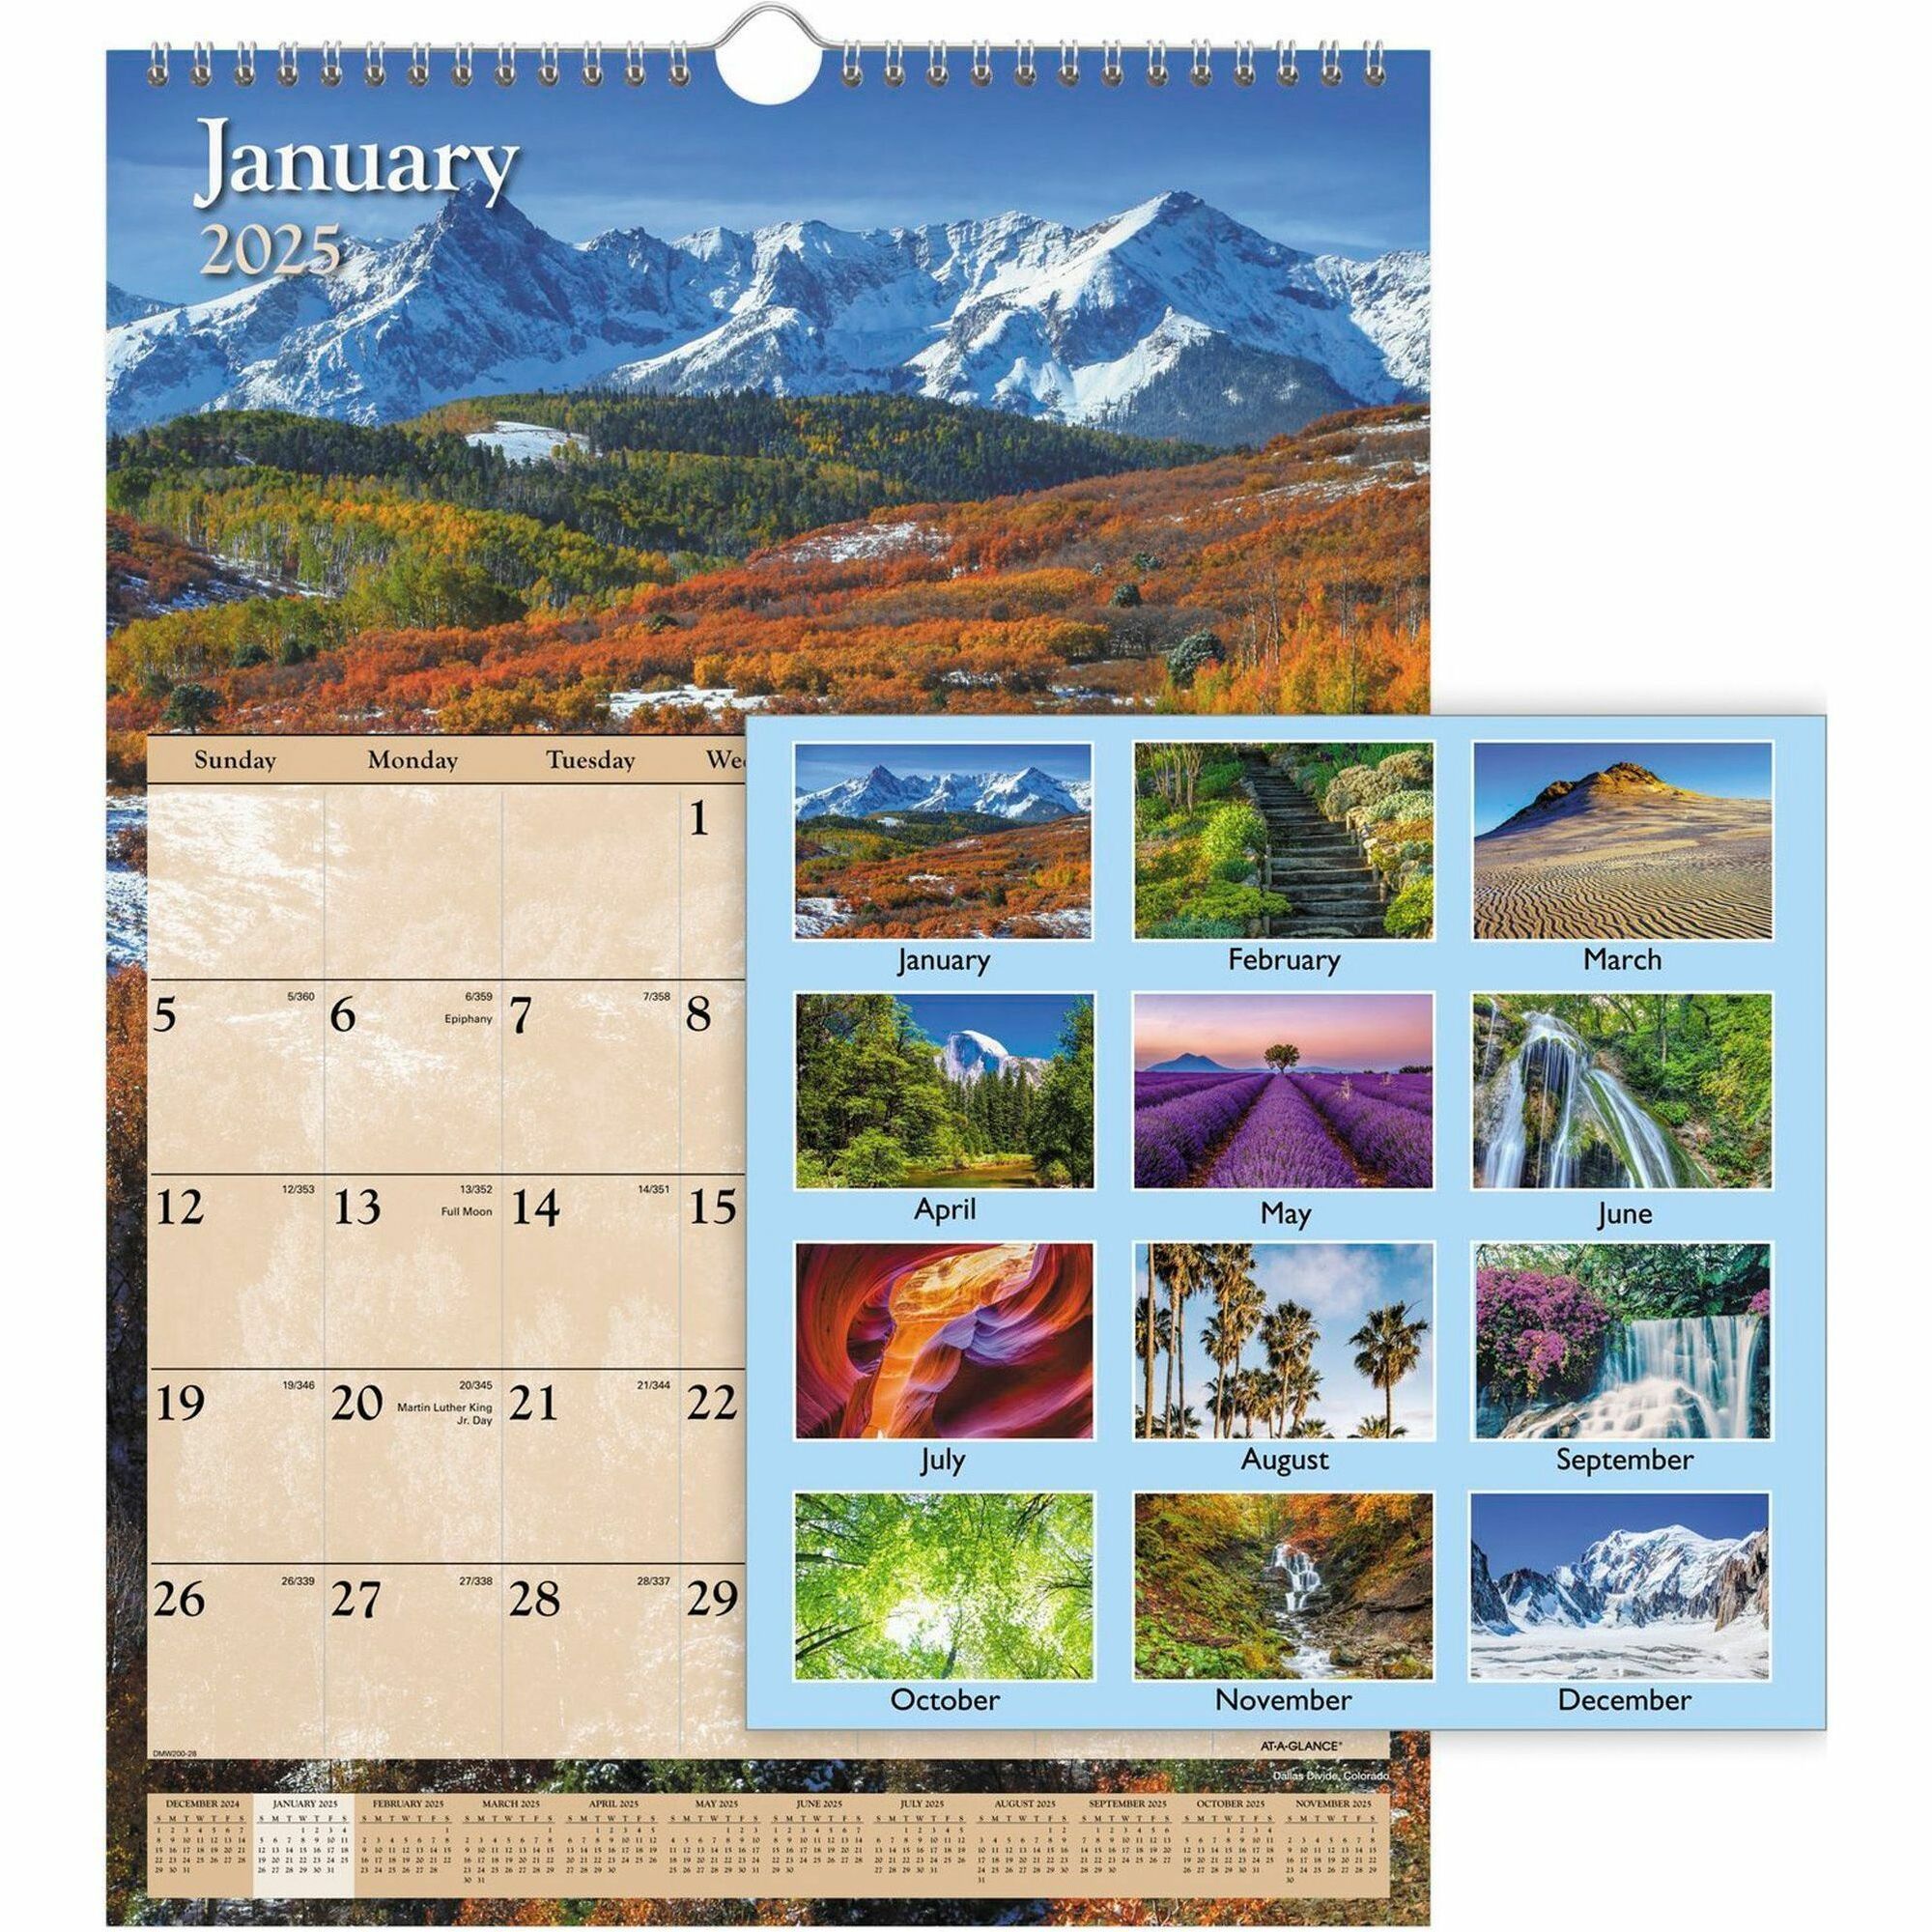 AtAGlance Scenic Monthly Wall Calendar